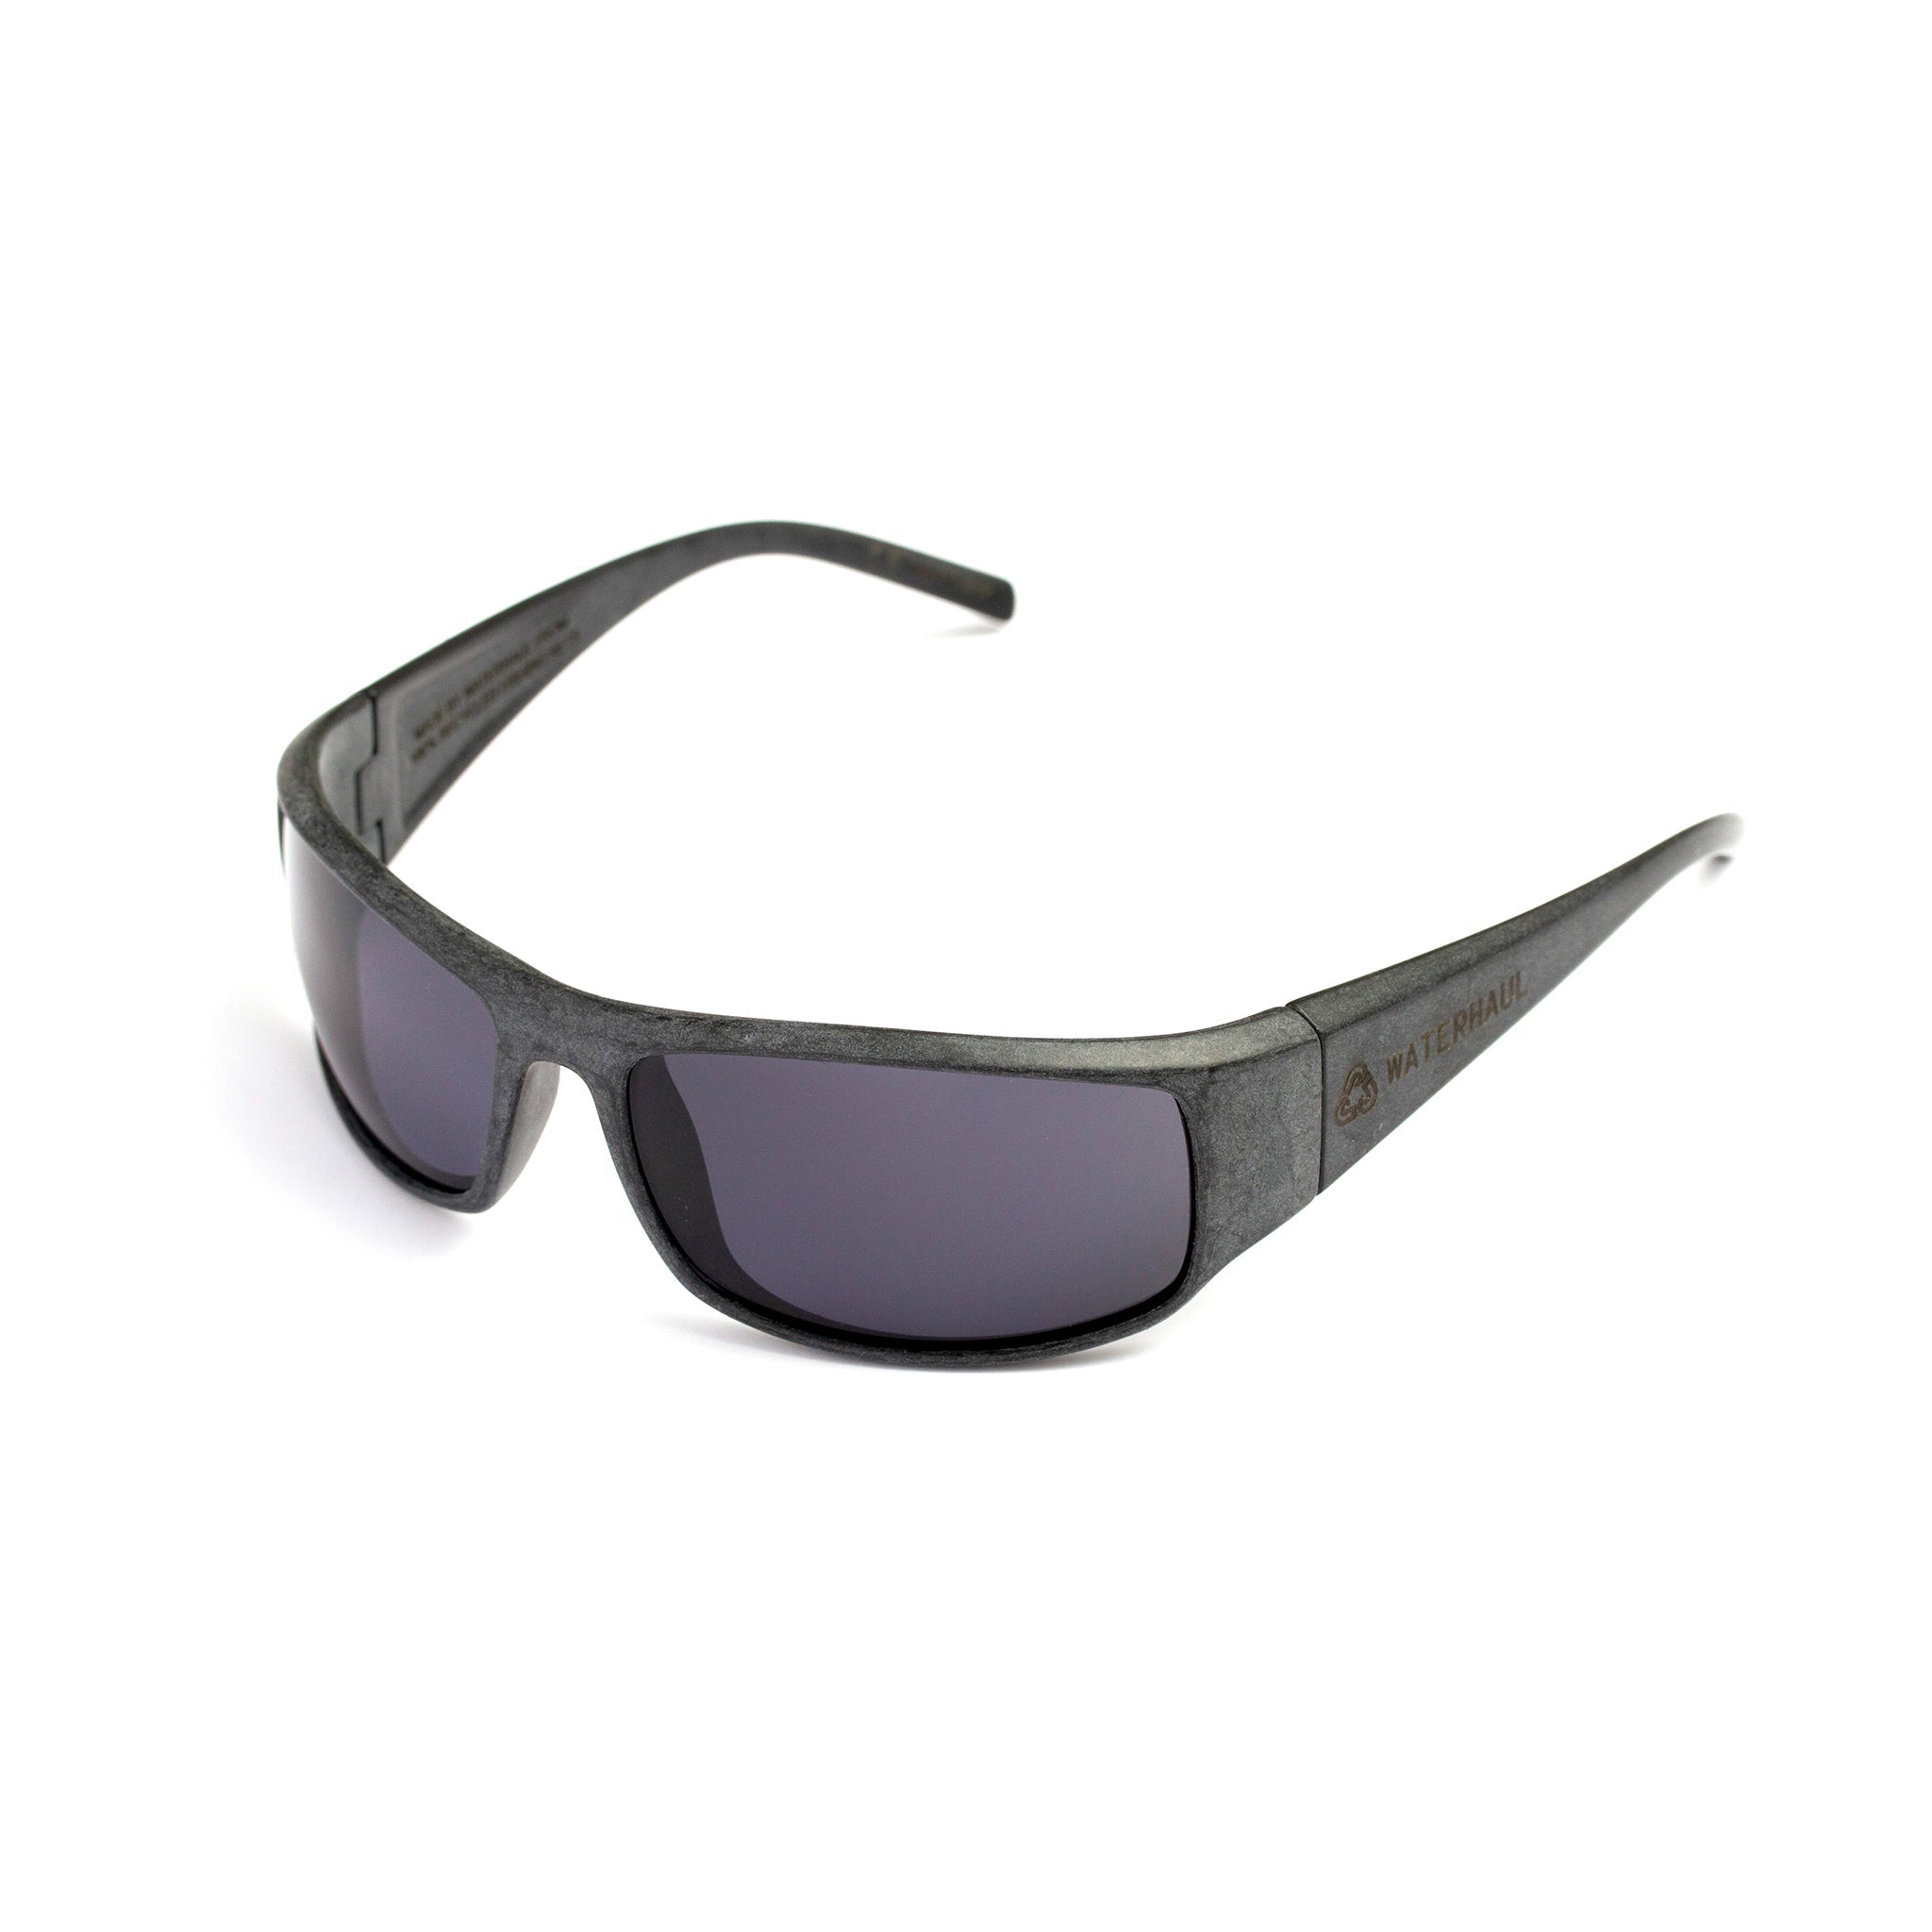 Waterhaul Zennor, Recycled Polarised Sunglasses, Slate/Grey